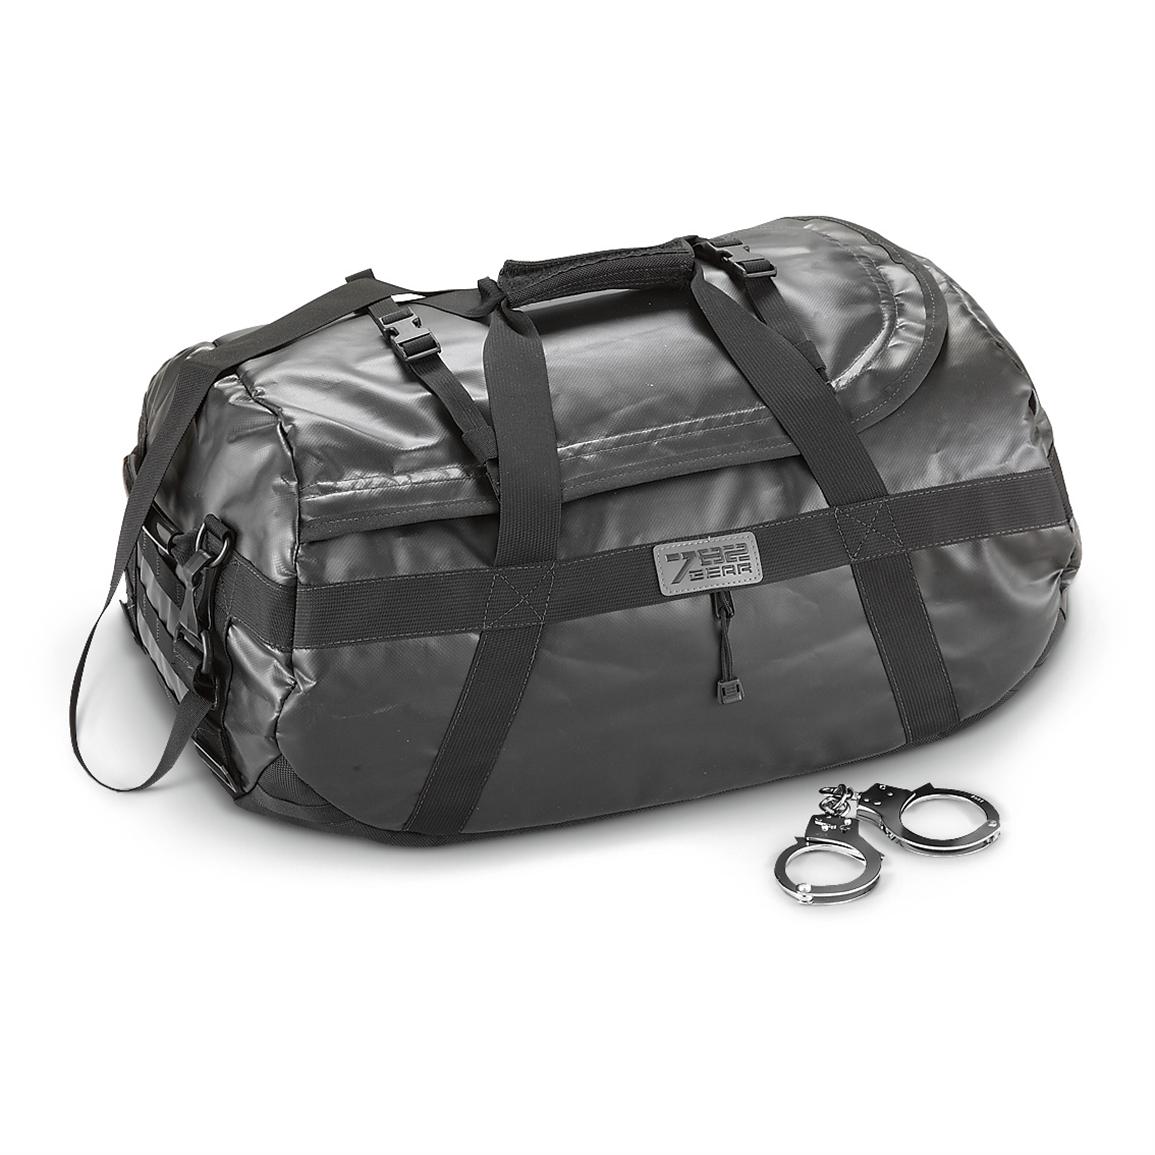 782® Waterproof Hi-tech Tactical Duffel, Black - 292039, Duffle Bags at Sportsman&#39;s Guide